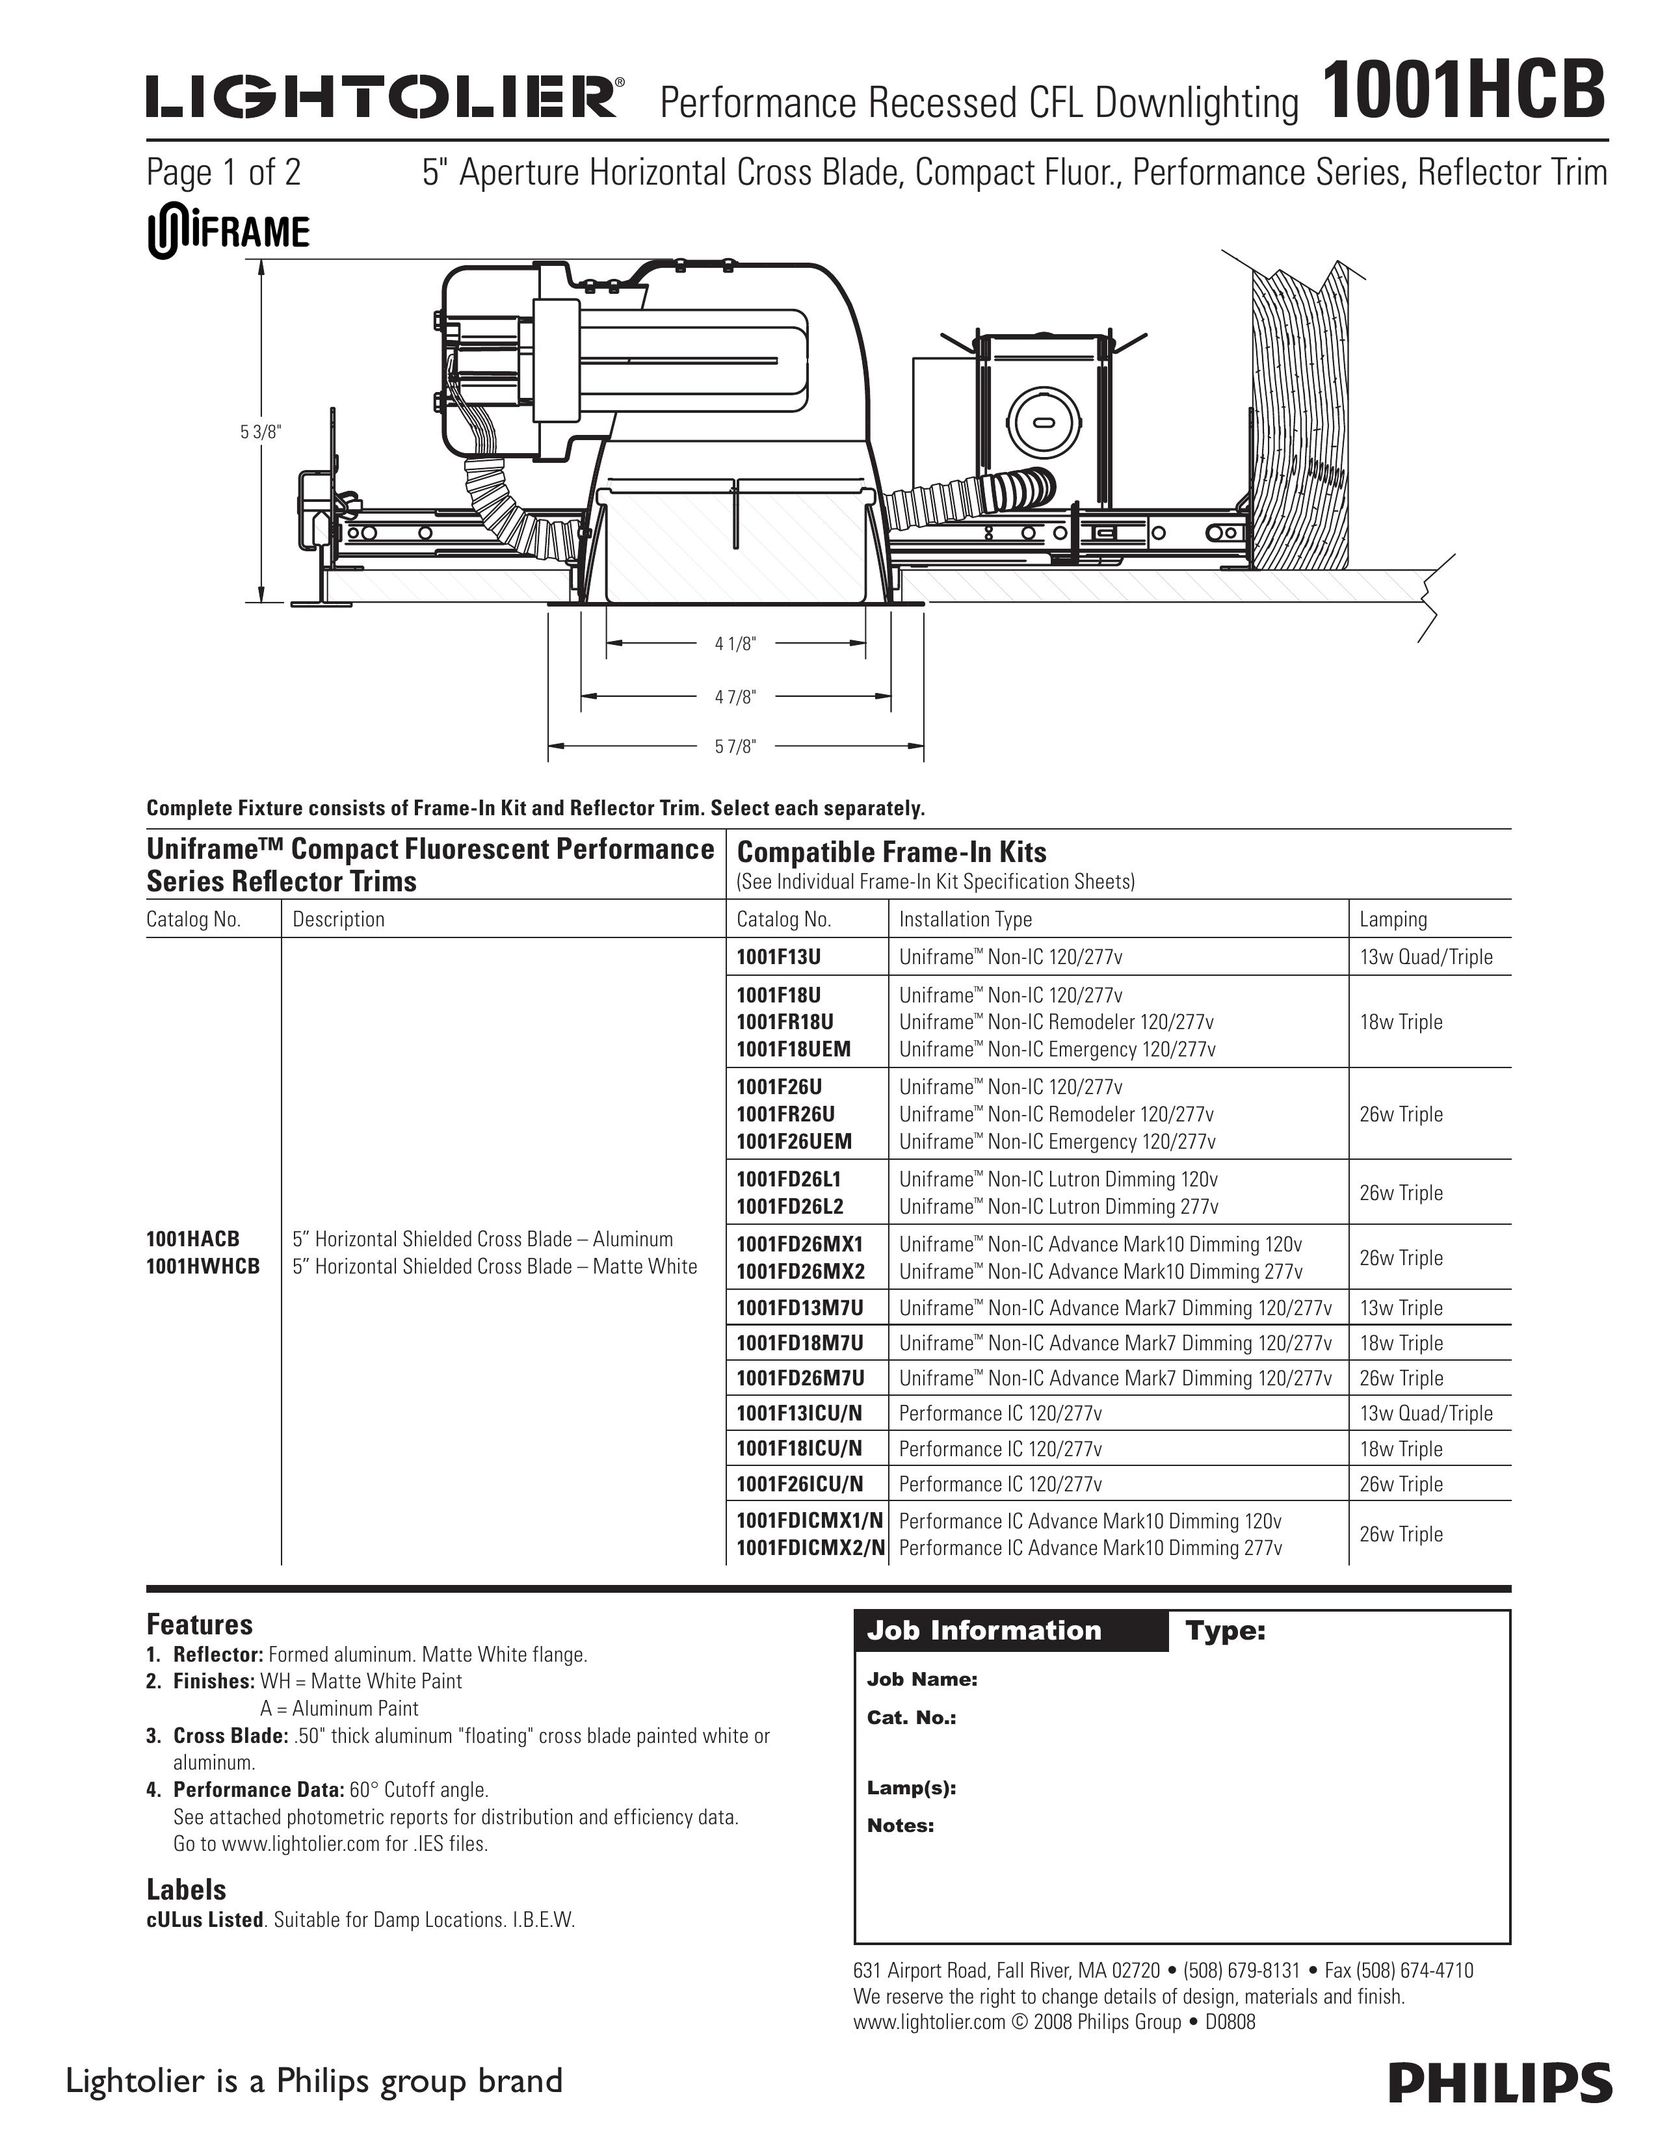 Lightolier 1001HCB Indoor Furnishings User Manual